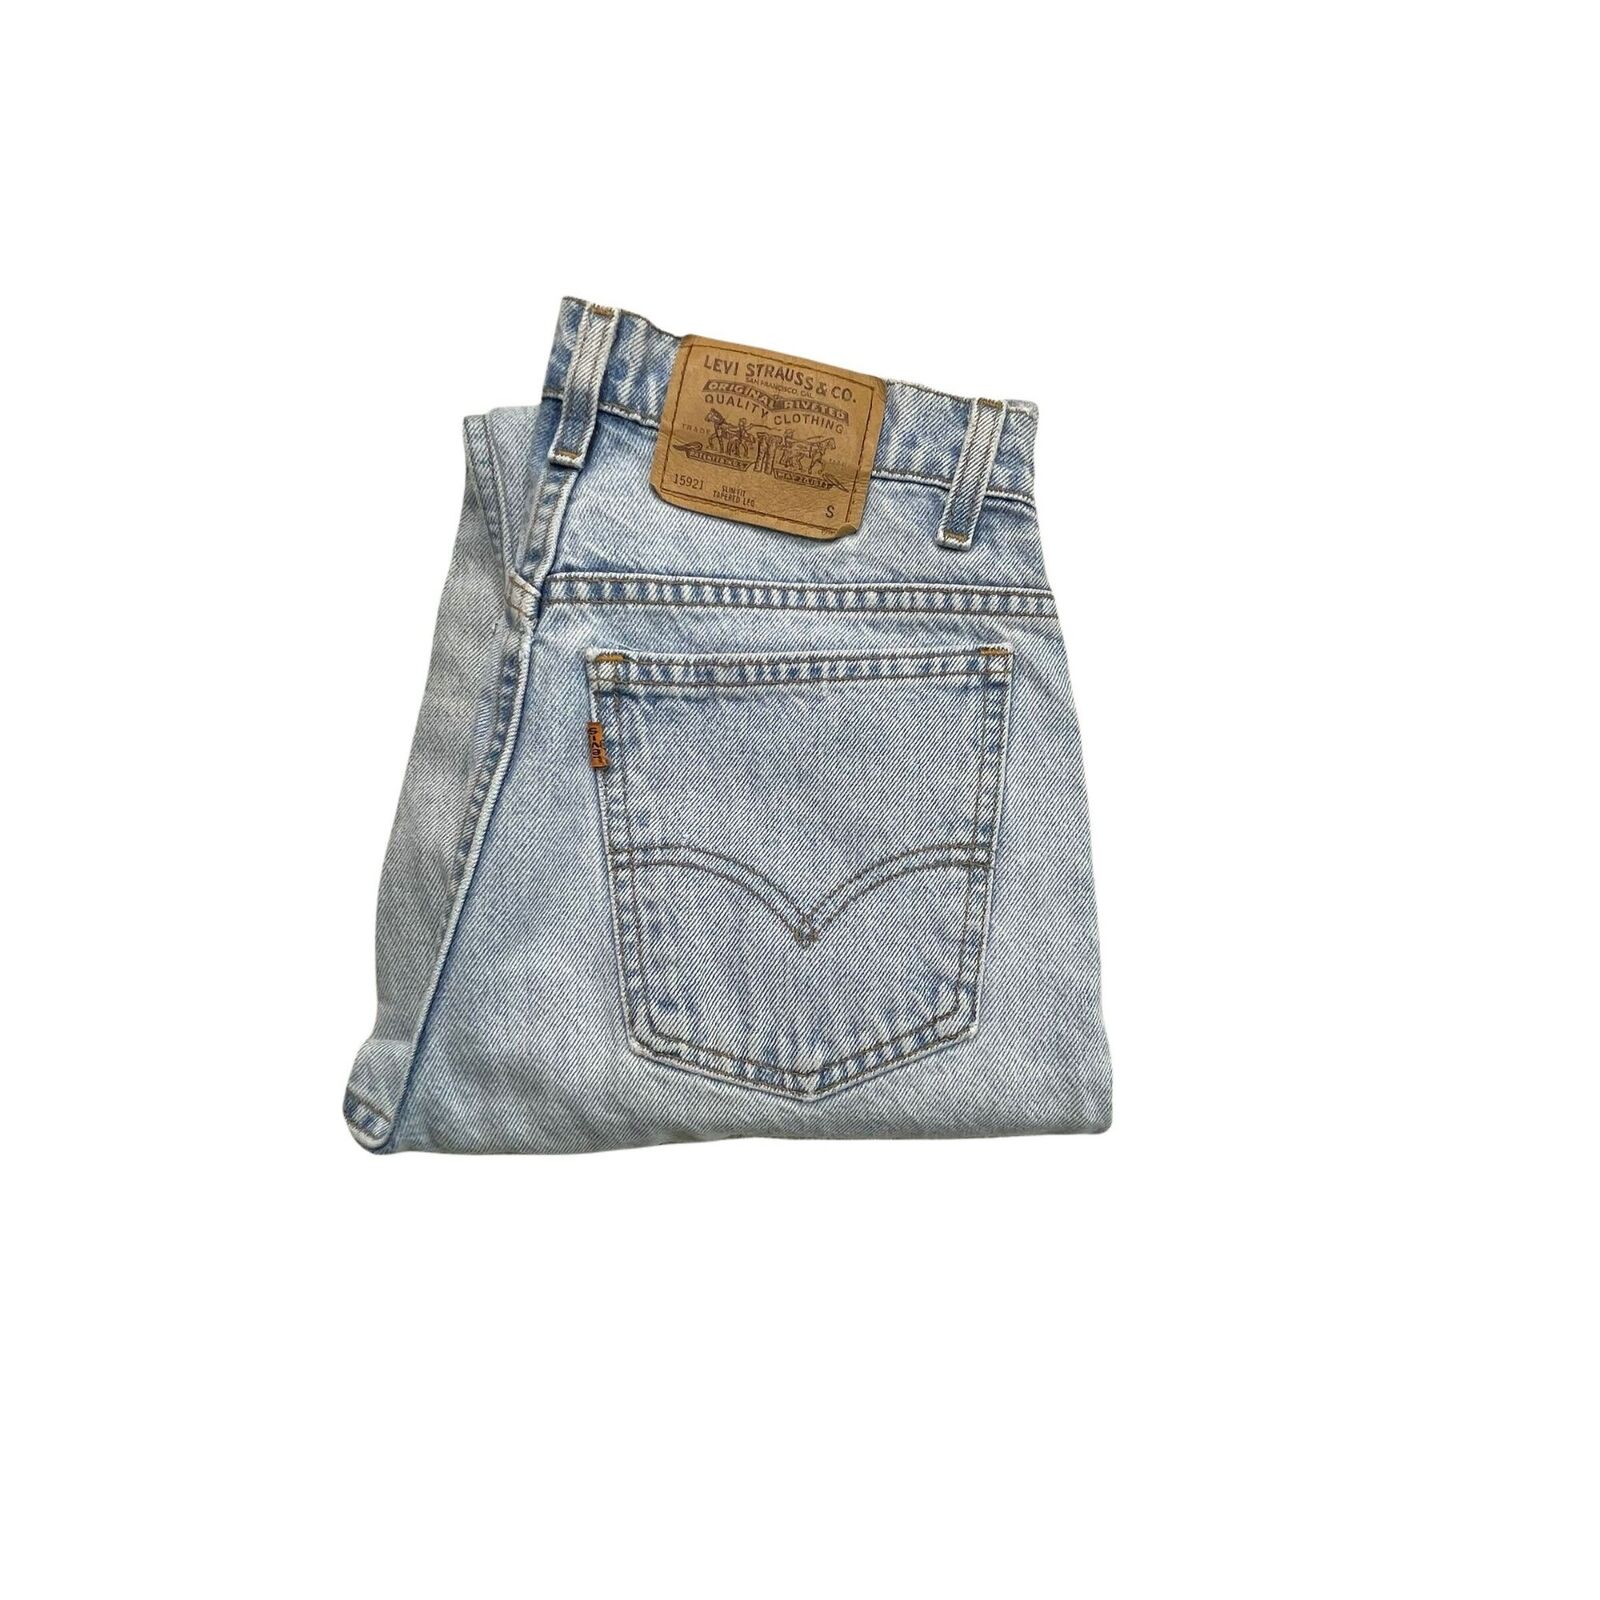 Vintage Women's Levis 912 Slim Tapered Jeans, Size 8 Short | eBay